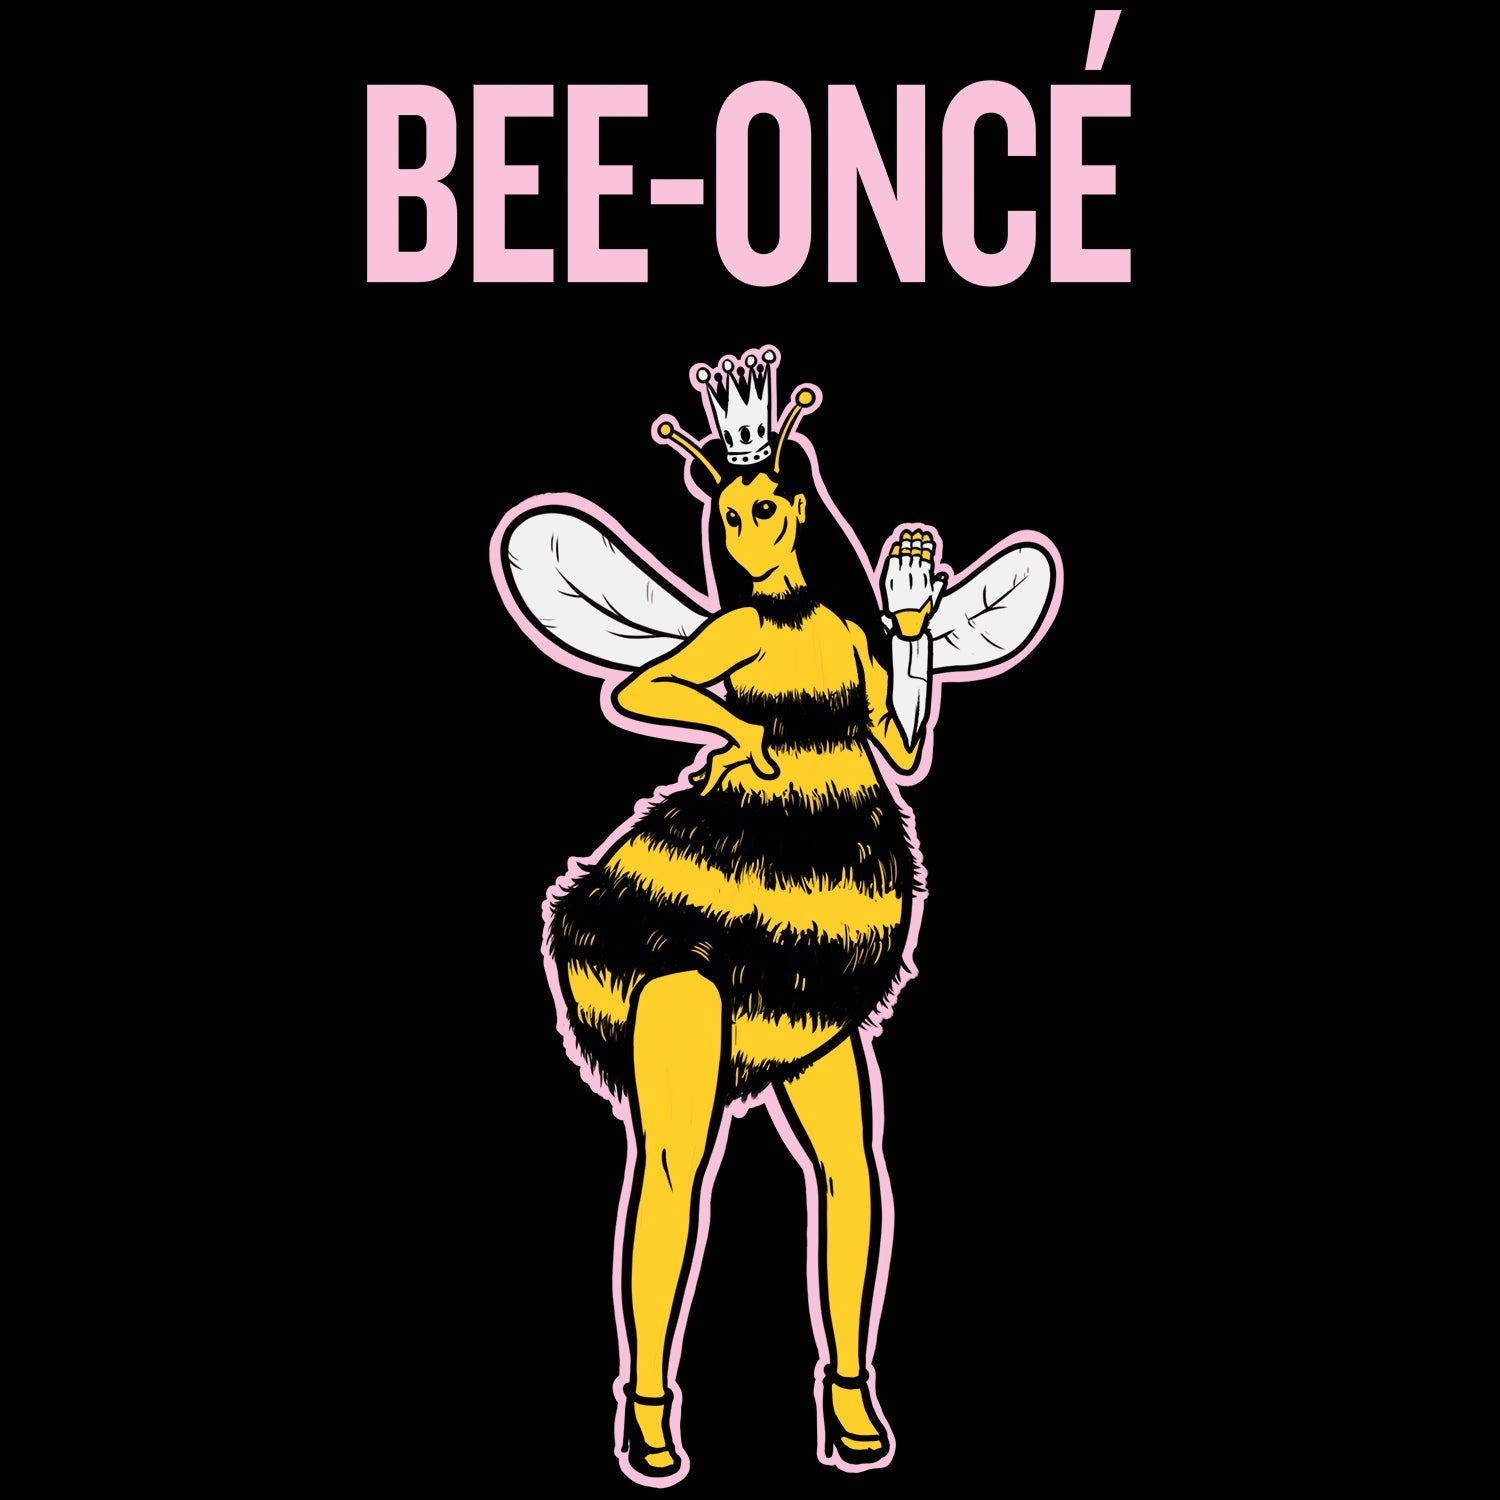 Bee-once Kids T Shirt